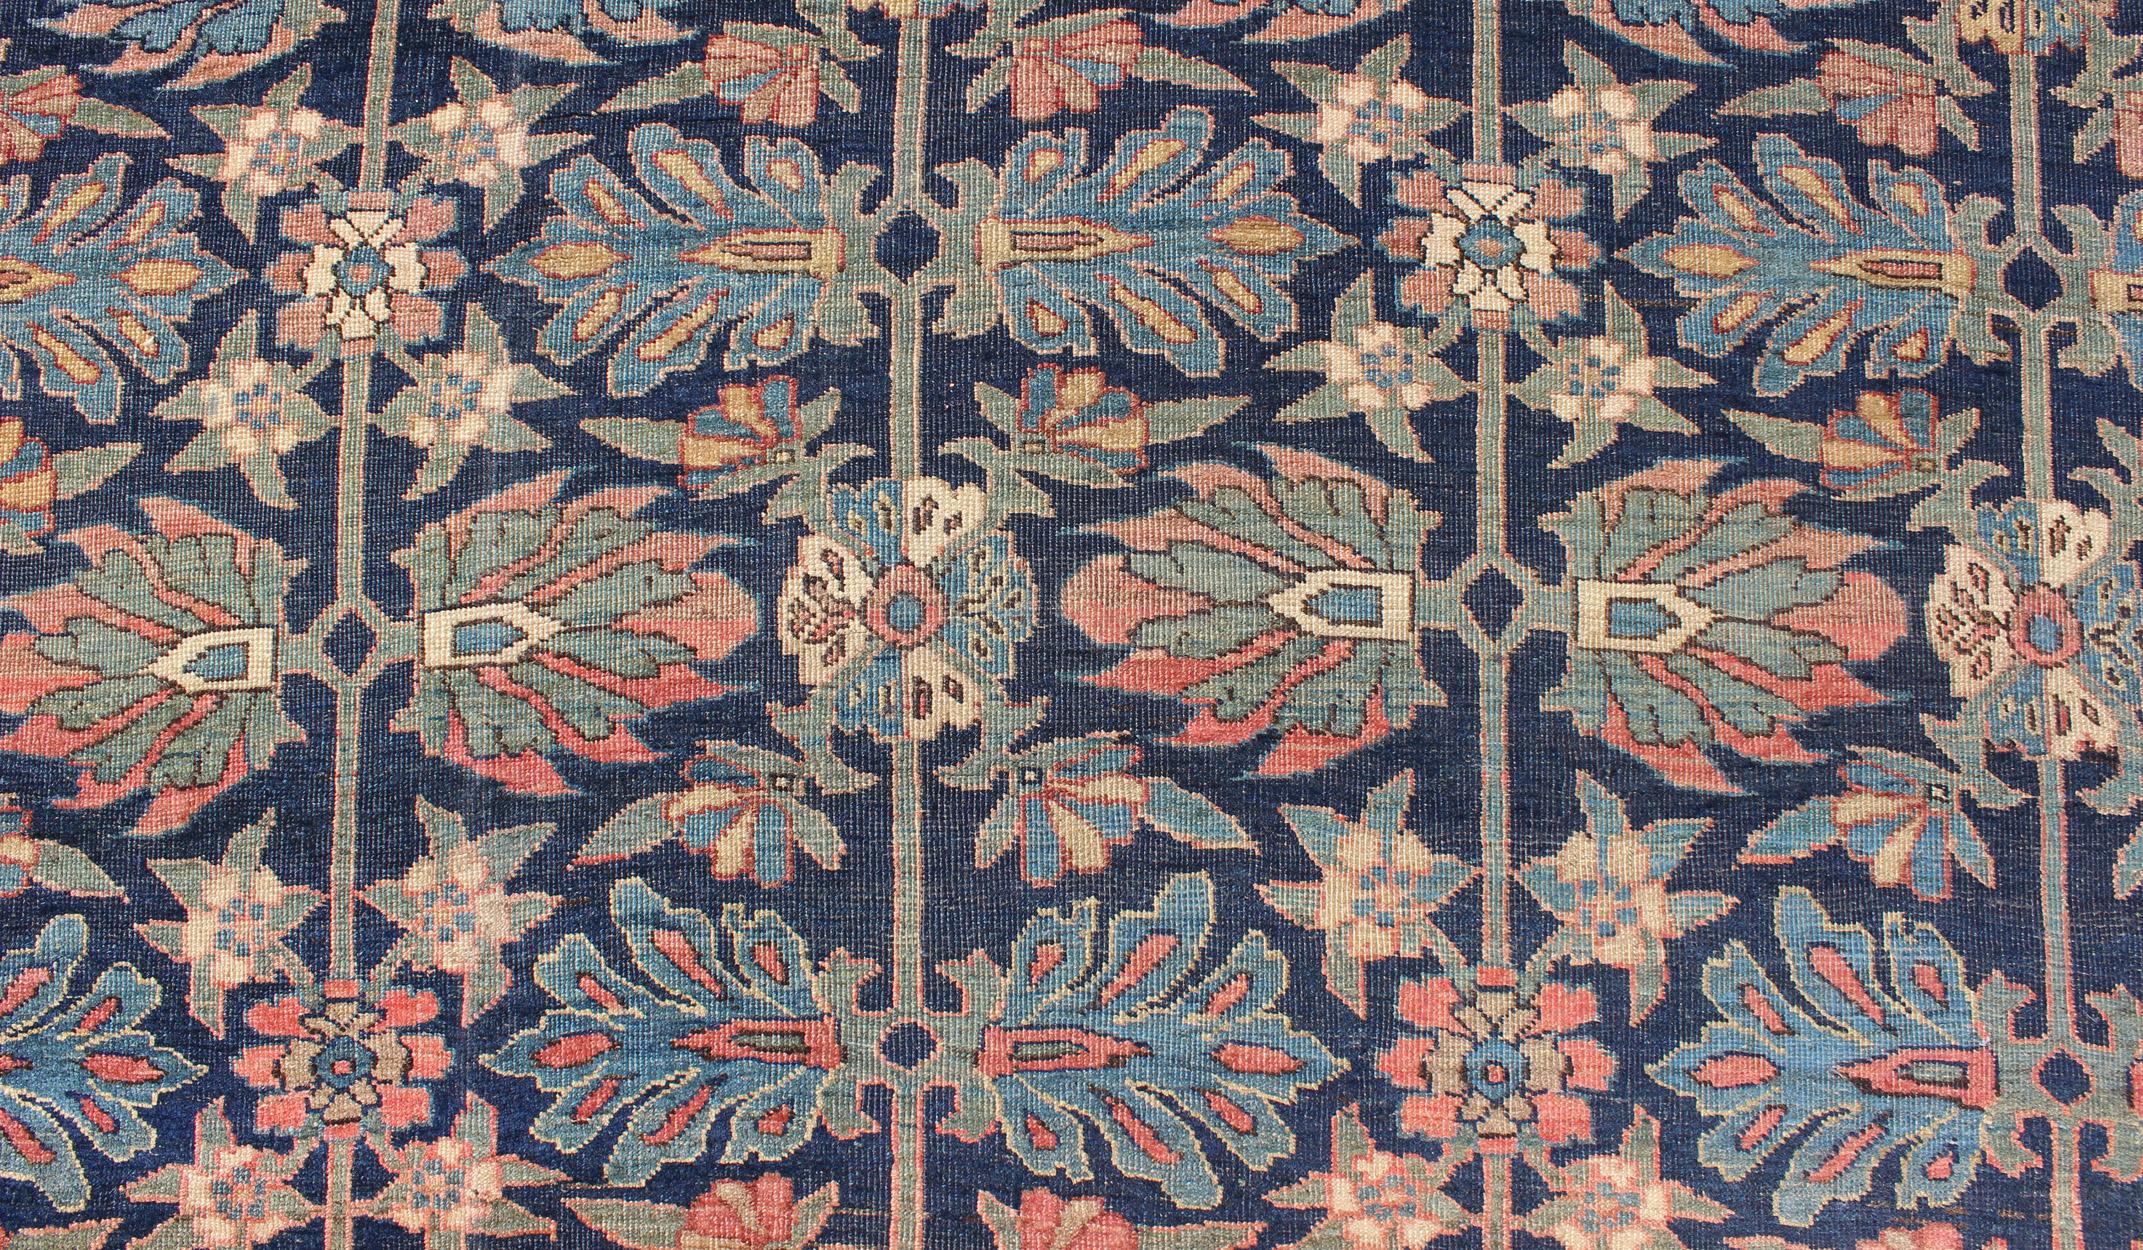 Large Antique Persian Bidjar Rug in Blue Background and Floral Pattern 5